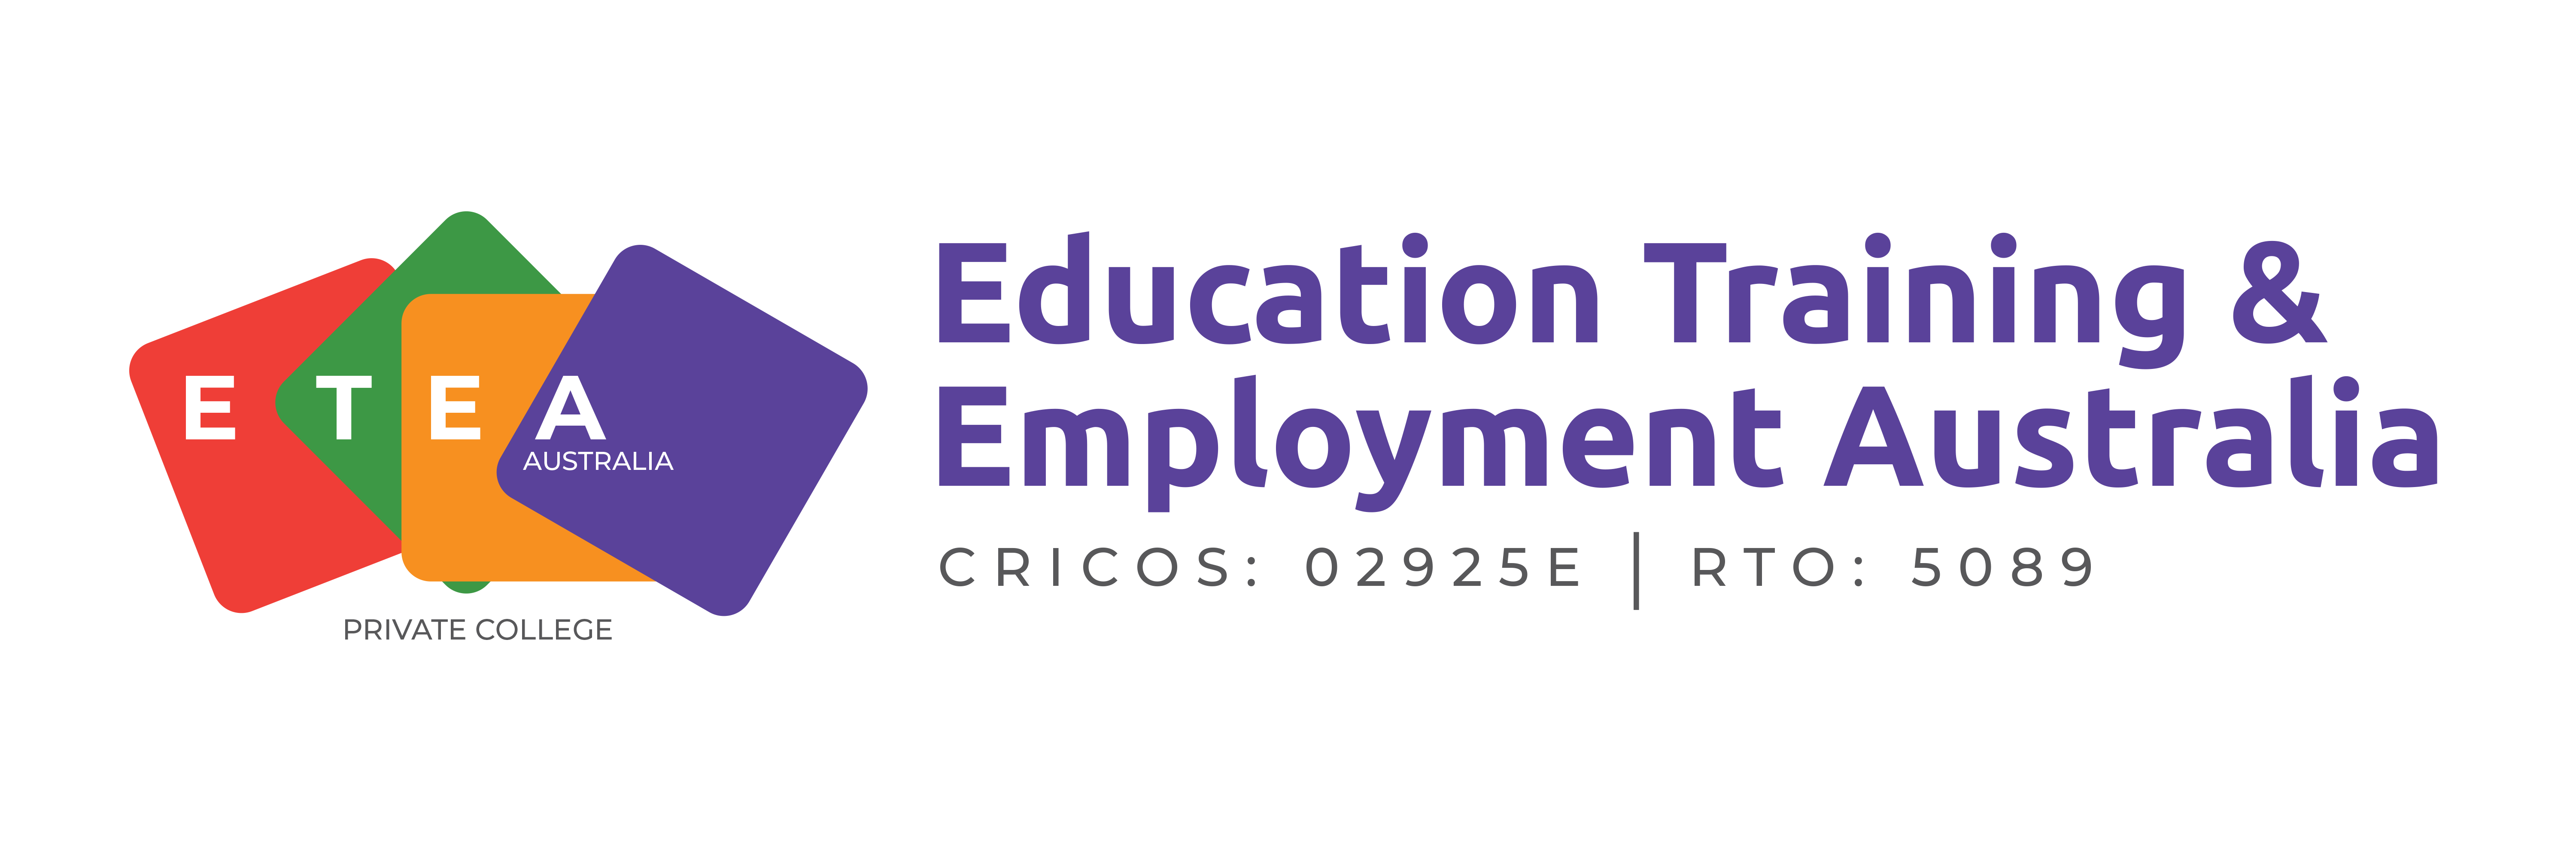 Education Training & Employment Australia